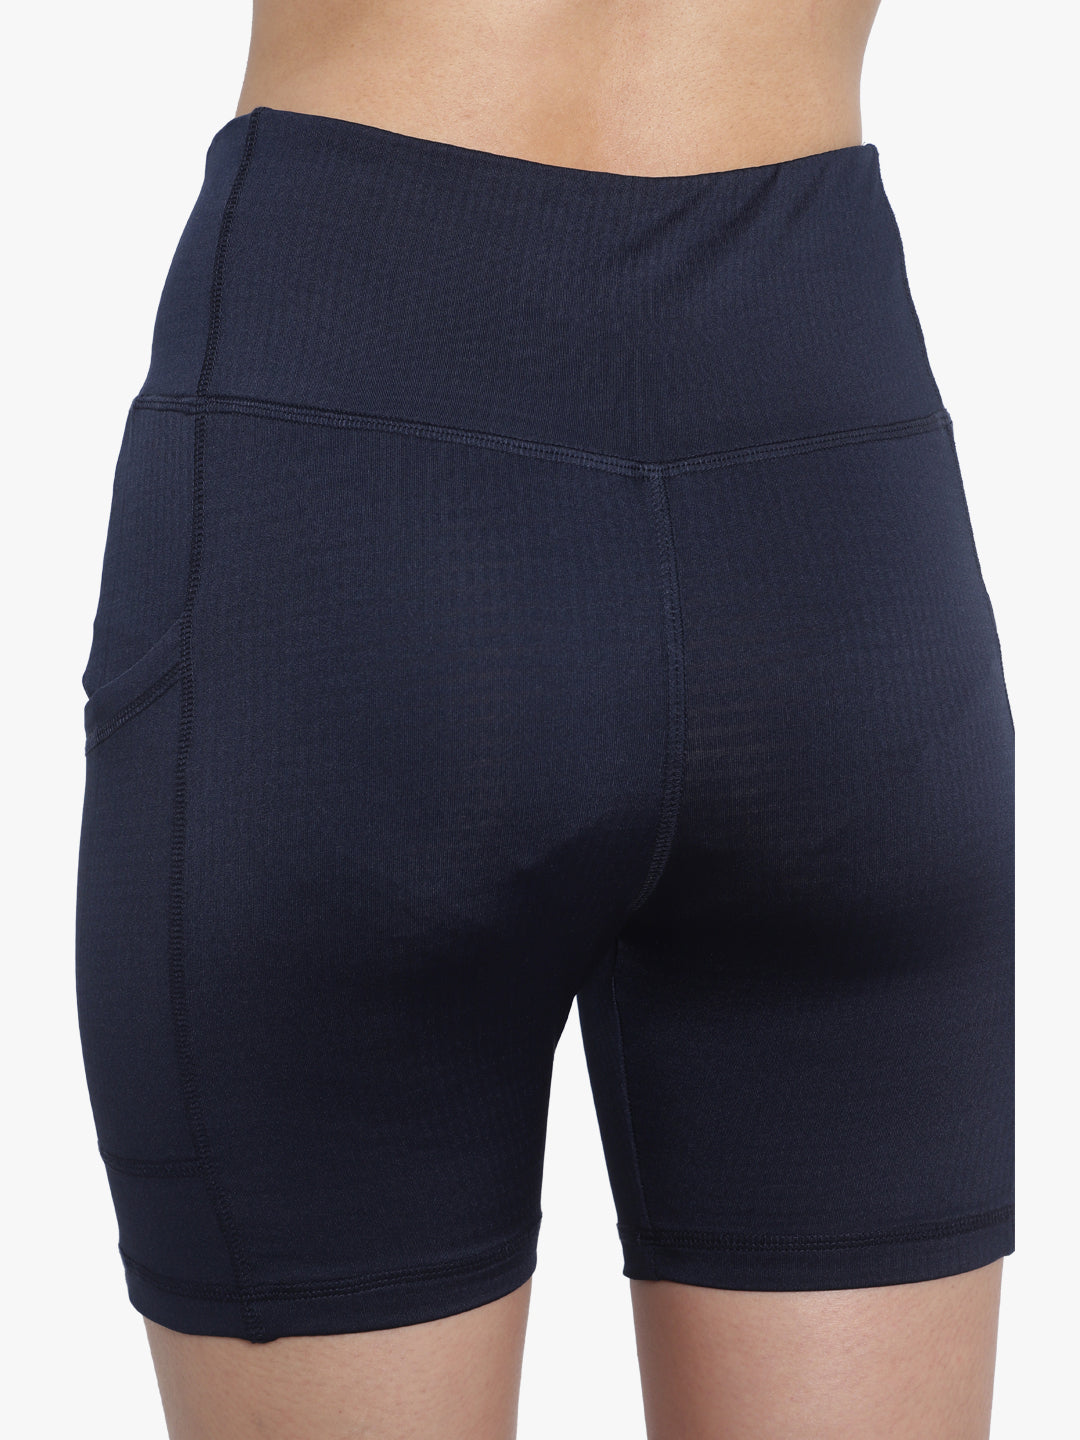 Mirage Shorts & Sports Bra Set - Blue